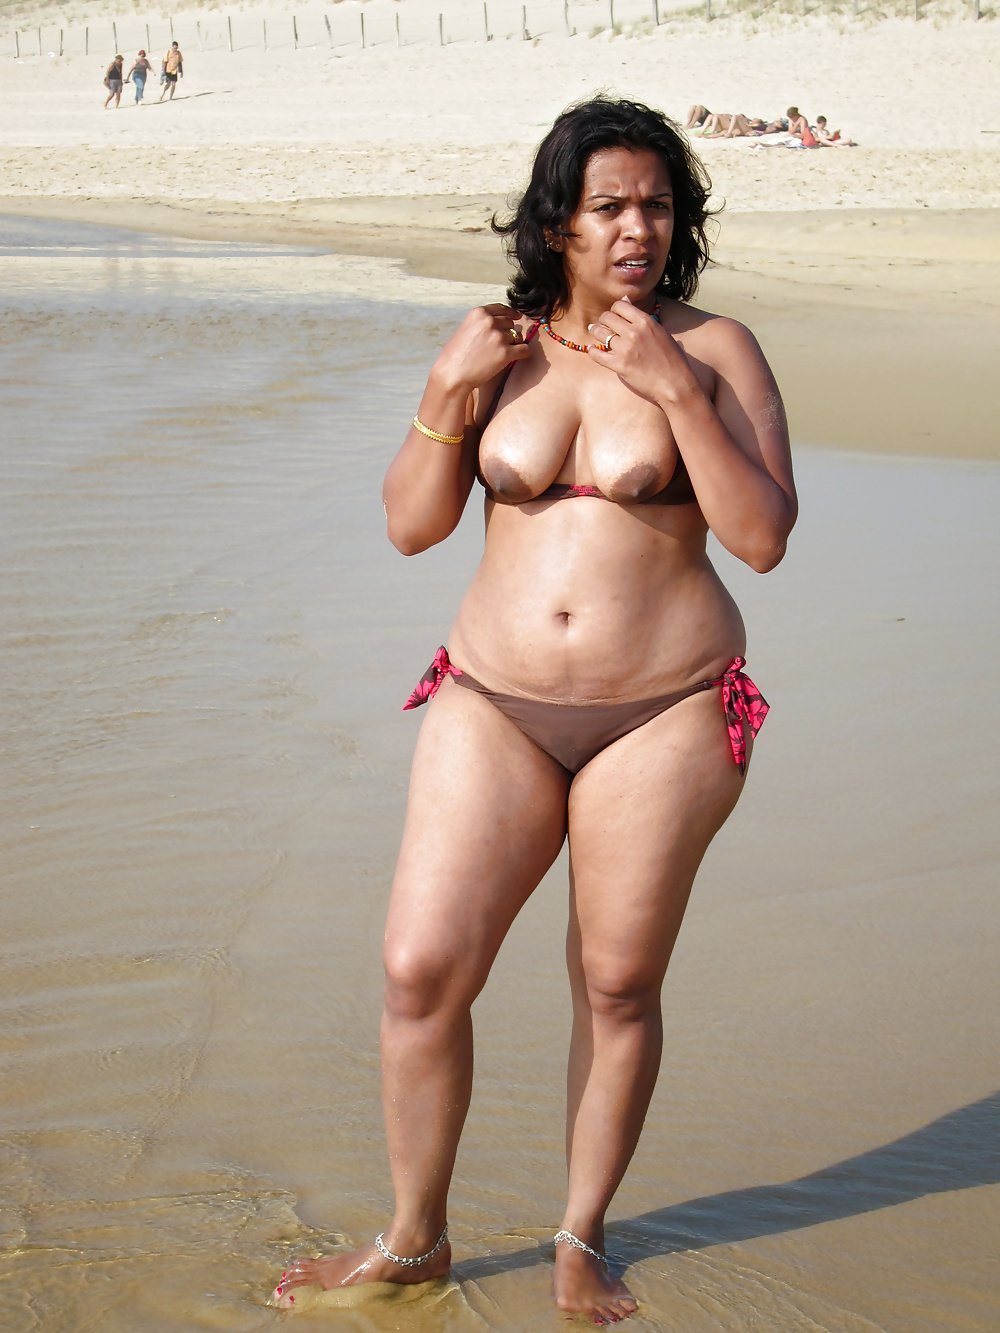 Bondages woman blowjob dick on beach